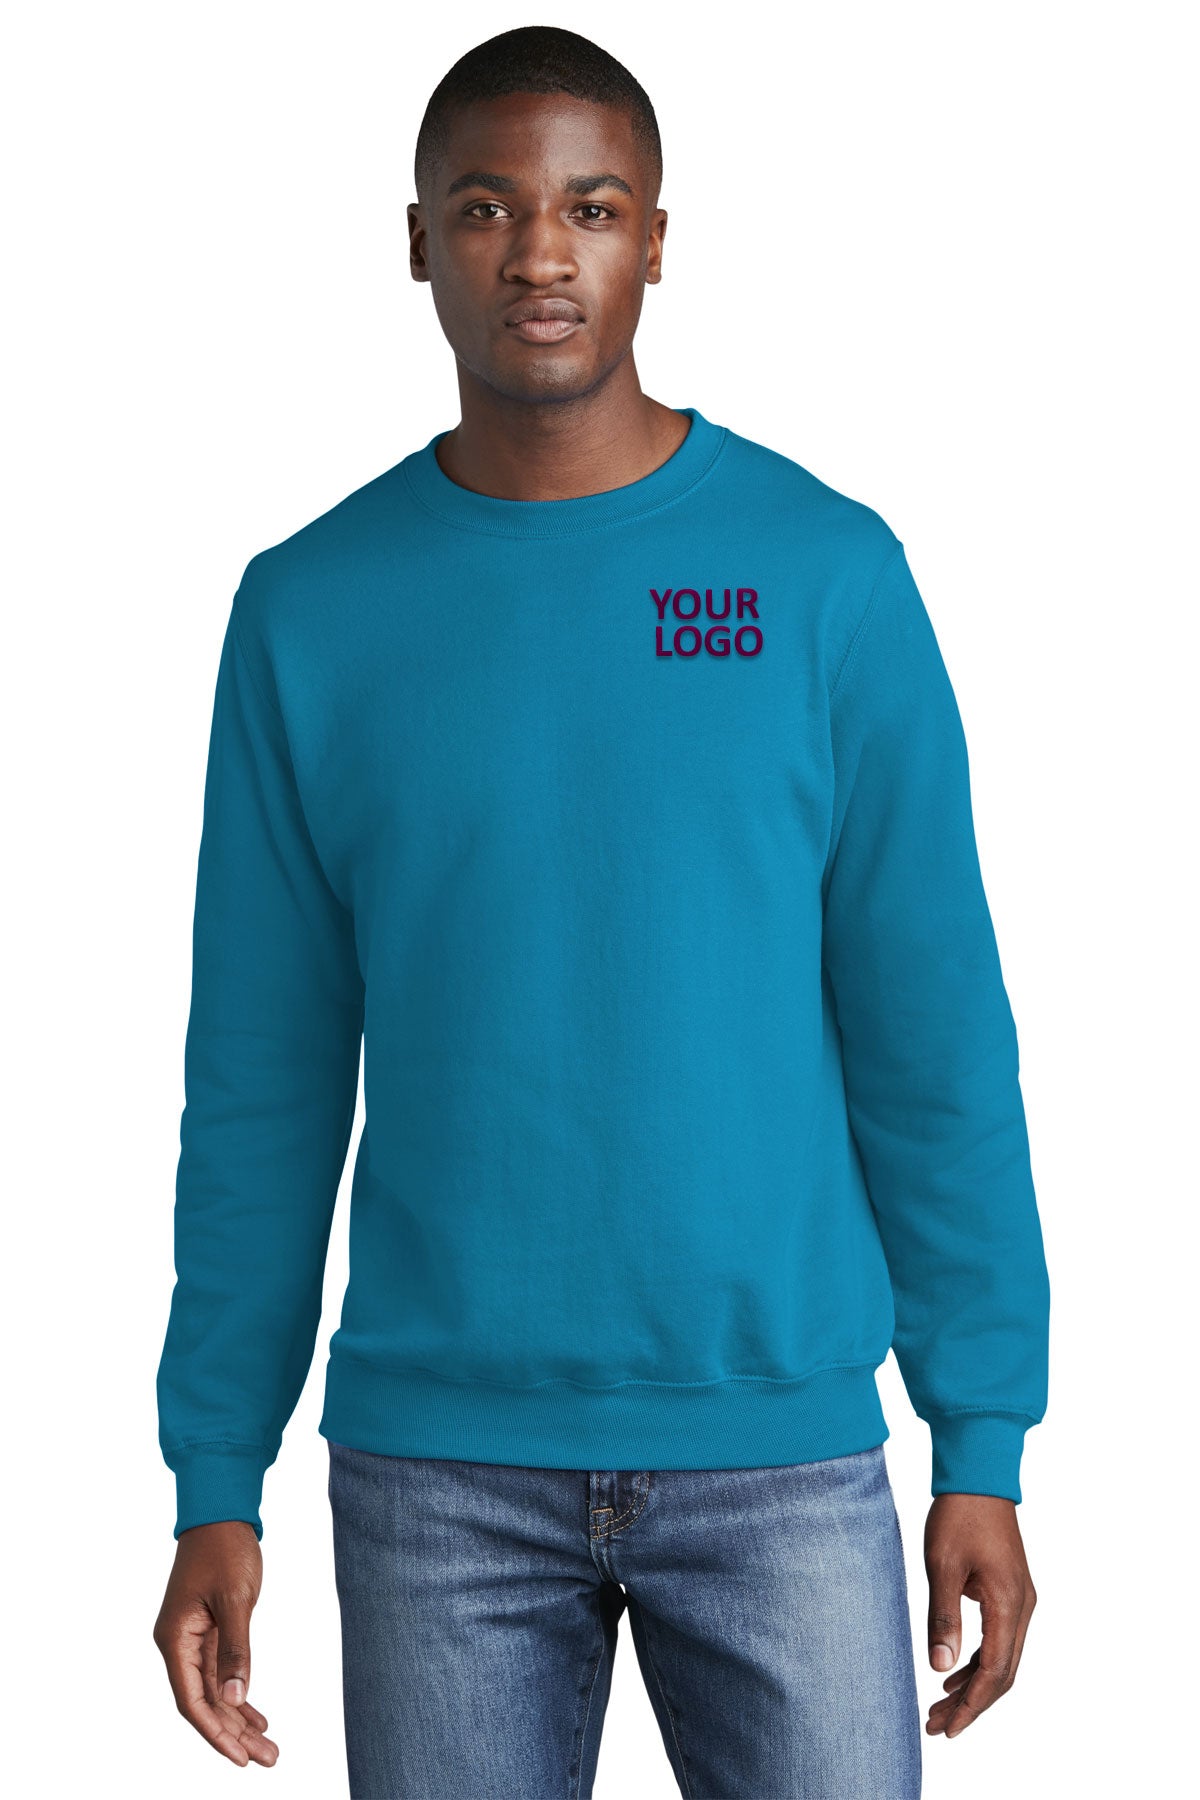 port & company neon blue pc78 company sweatshirts embroidered